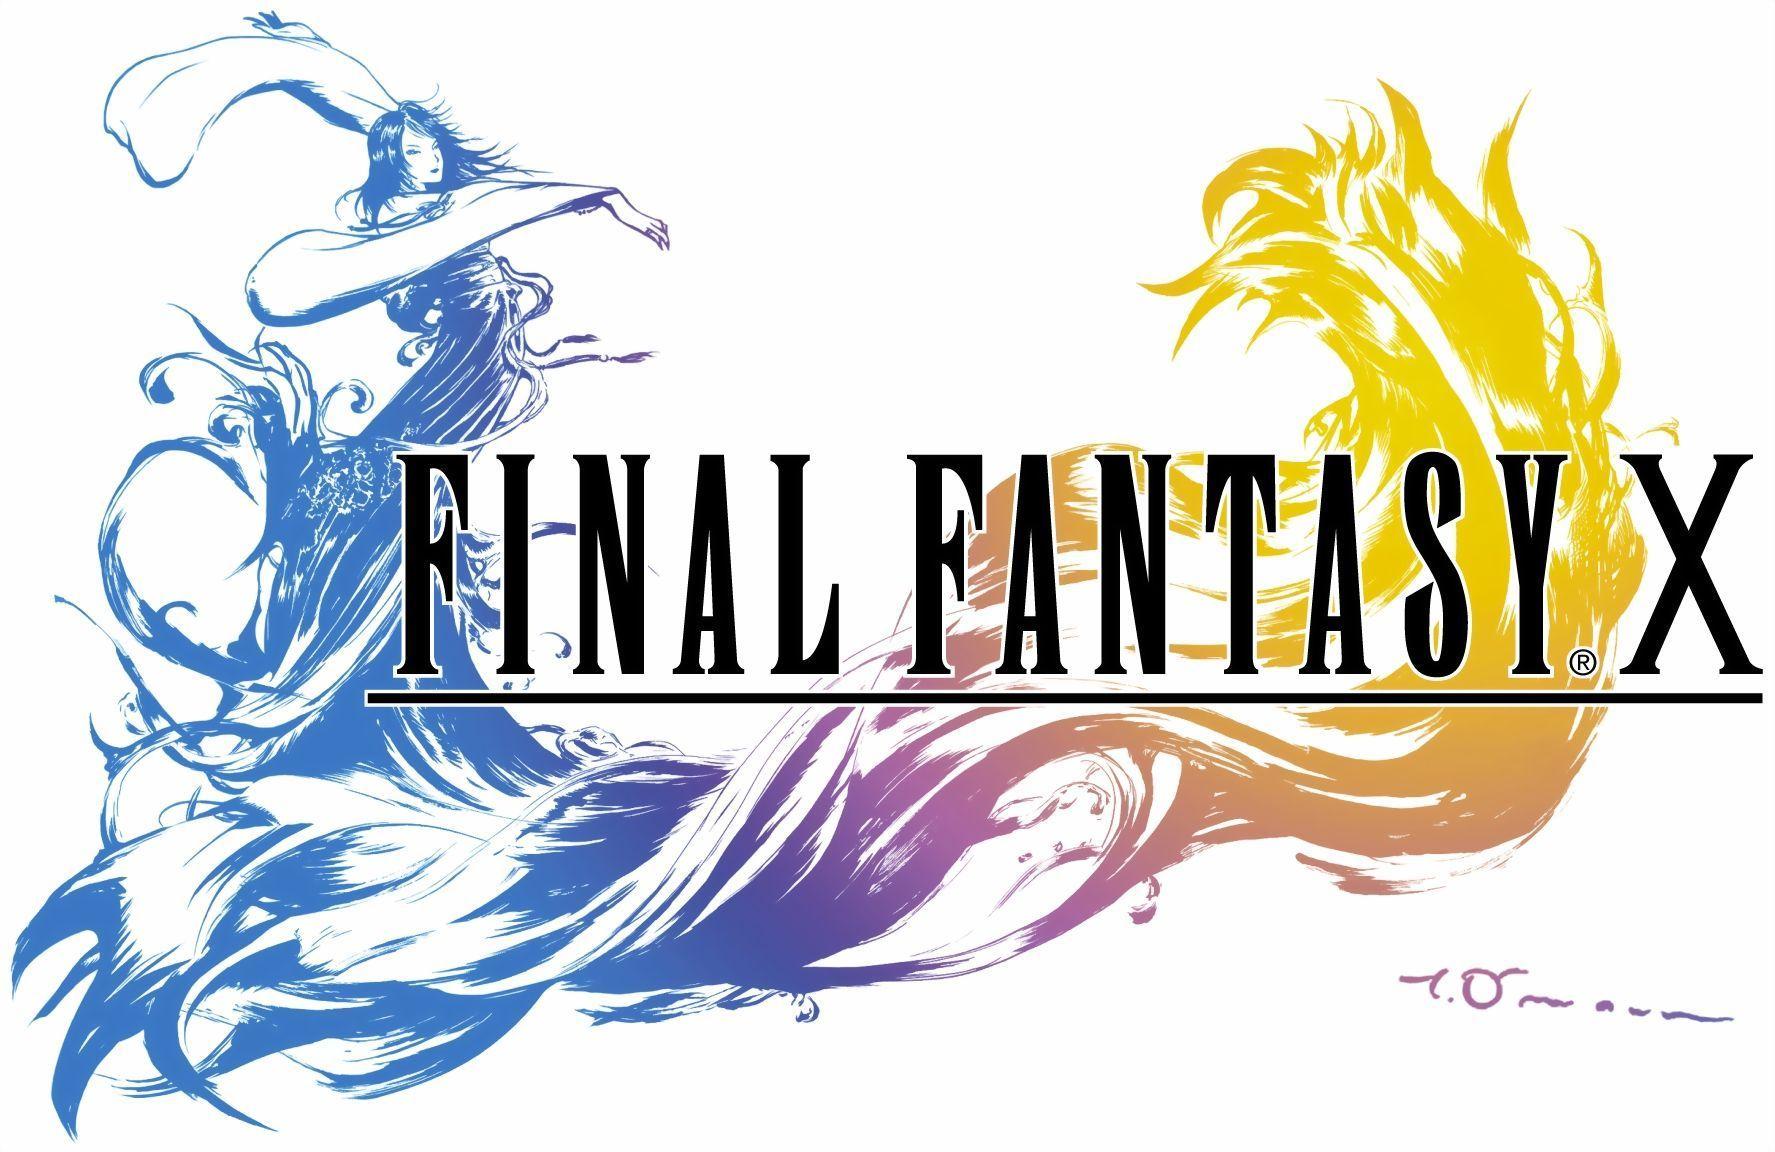 Final Fantasy X Final Fantasy Wiki has more Final Fantasy